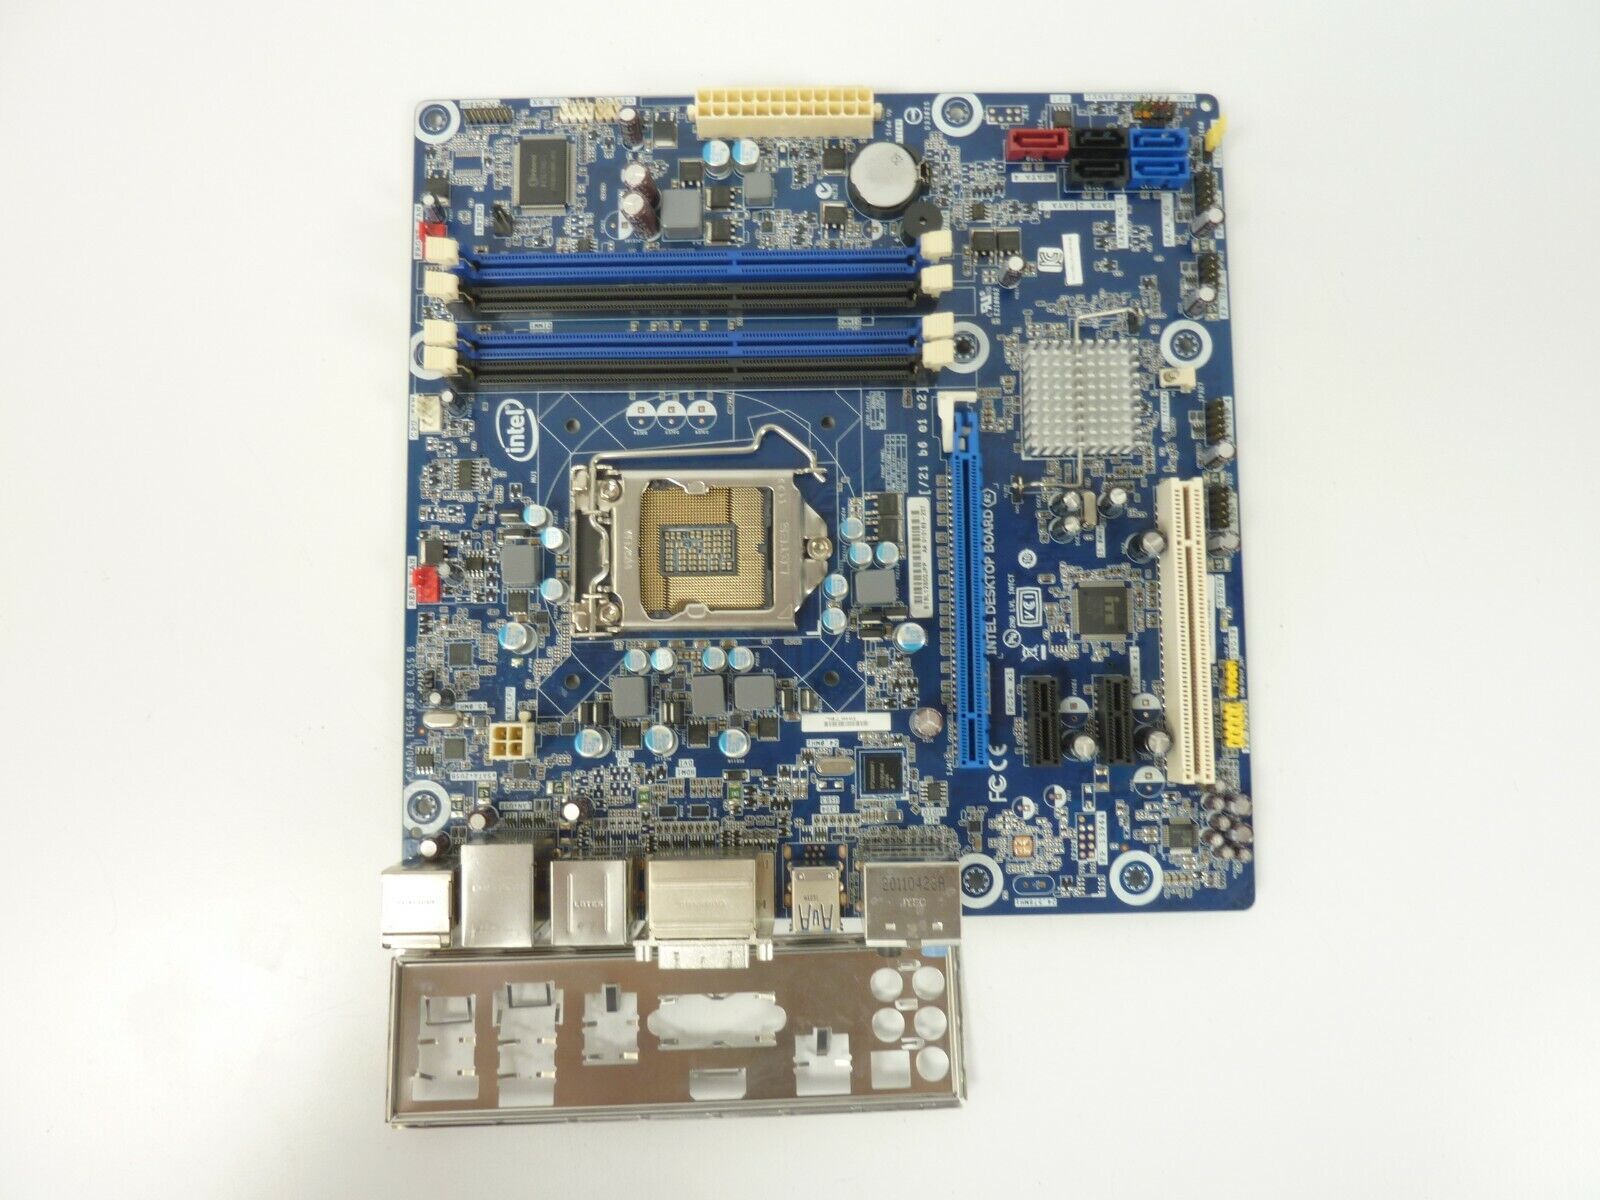 Intel DH67BL LGA 1155 Micro ATX DDR3 Motherboard with I/O Shield